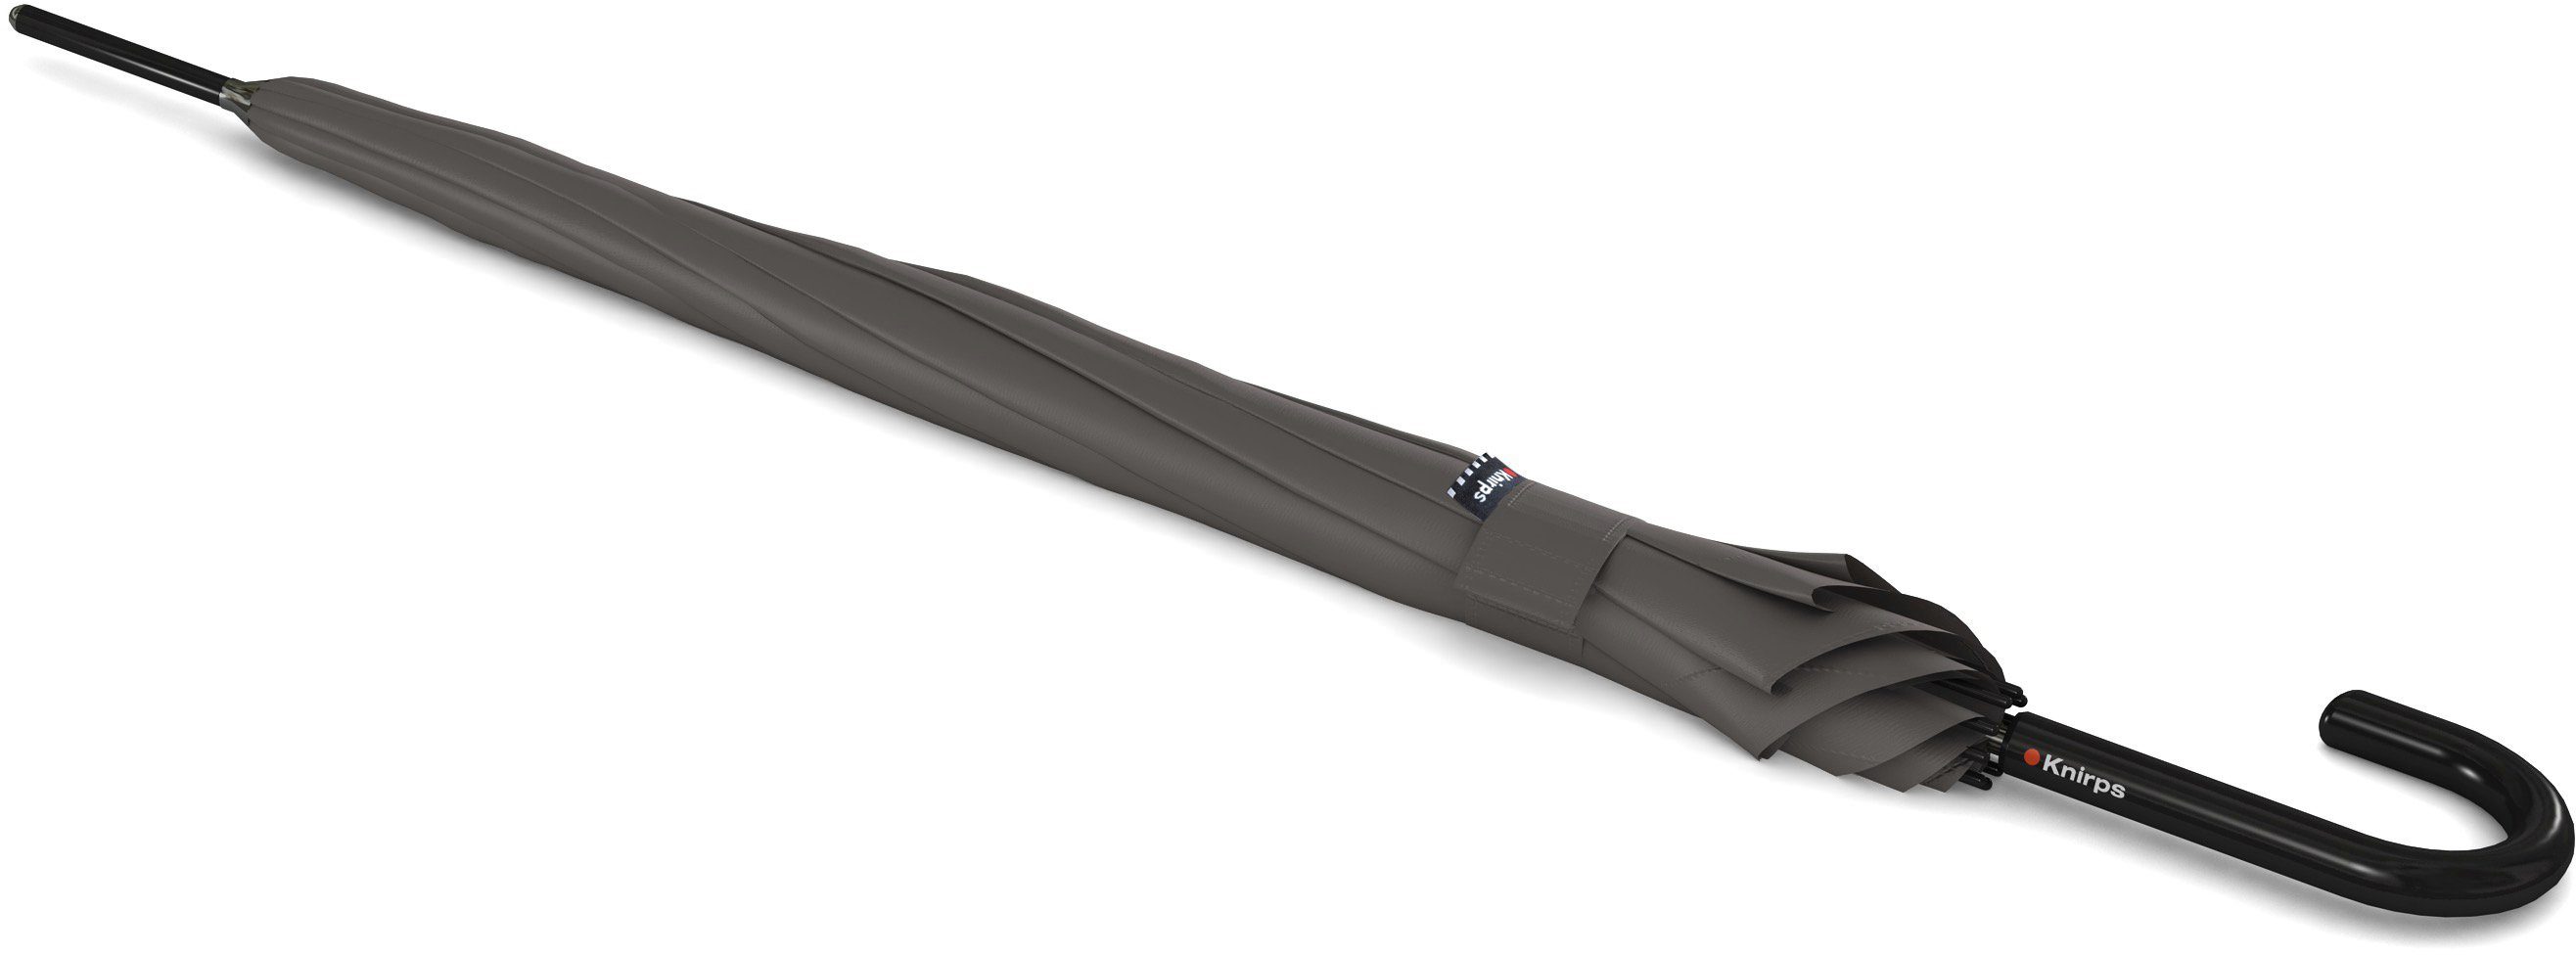 A.760 Stockregenschirm Stick Automatic, Dark Grey Knirps®